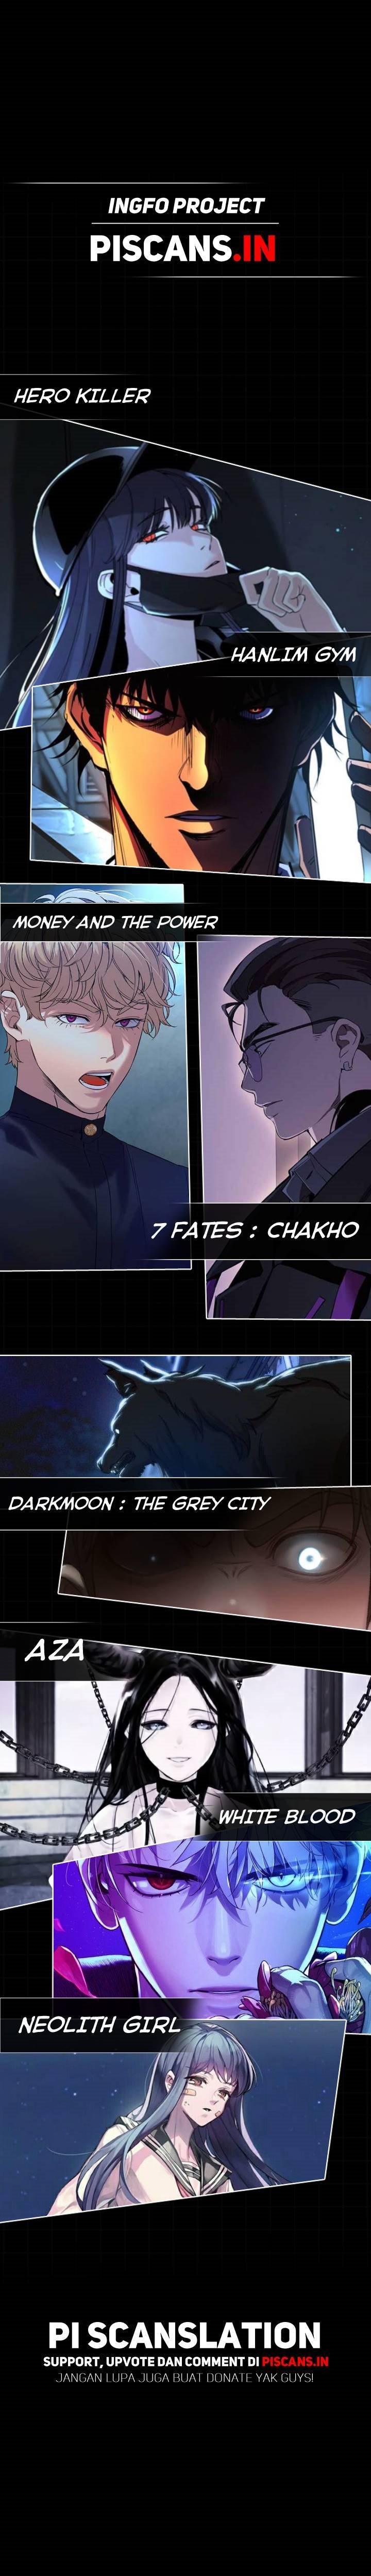 7fates Chakho Chapter 51